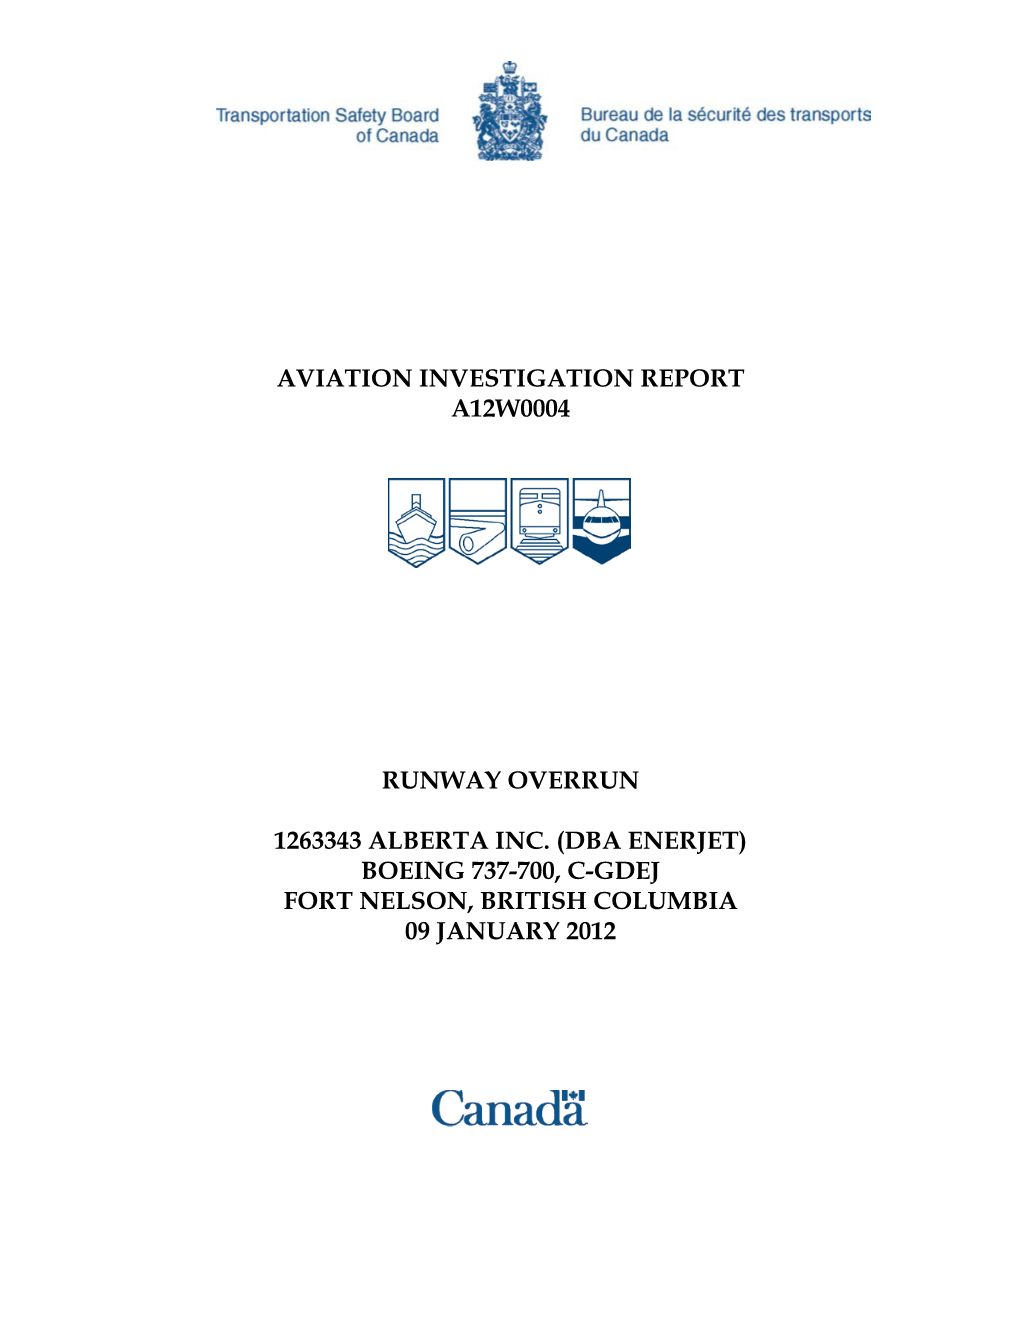 Aviation Investigation Report A12w0004